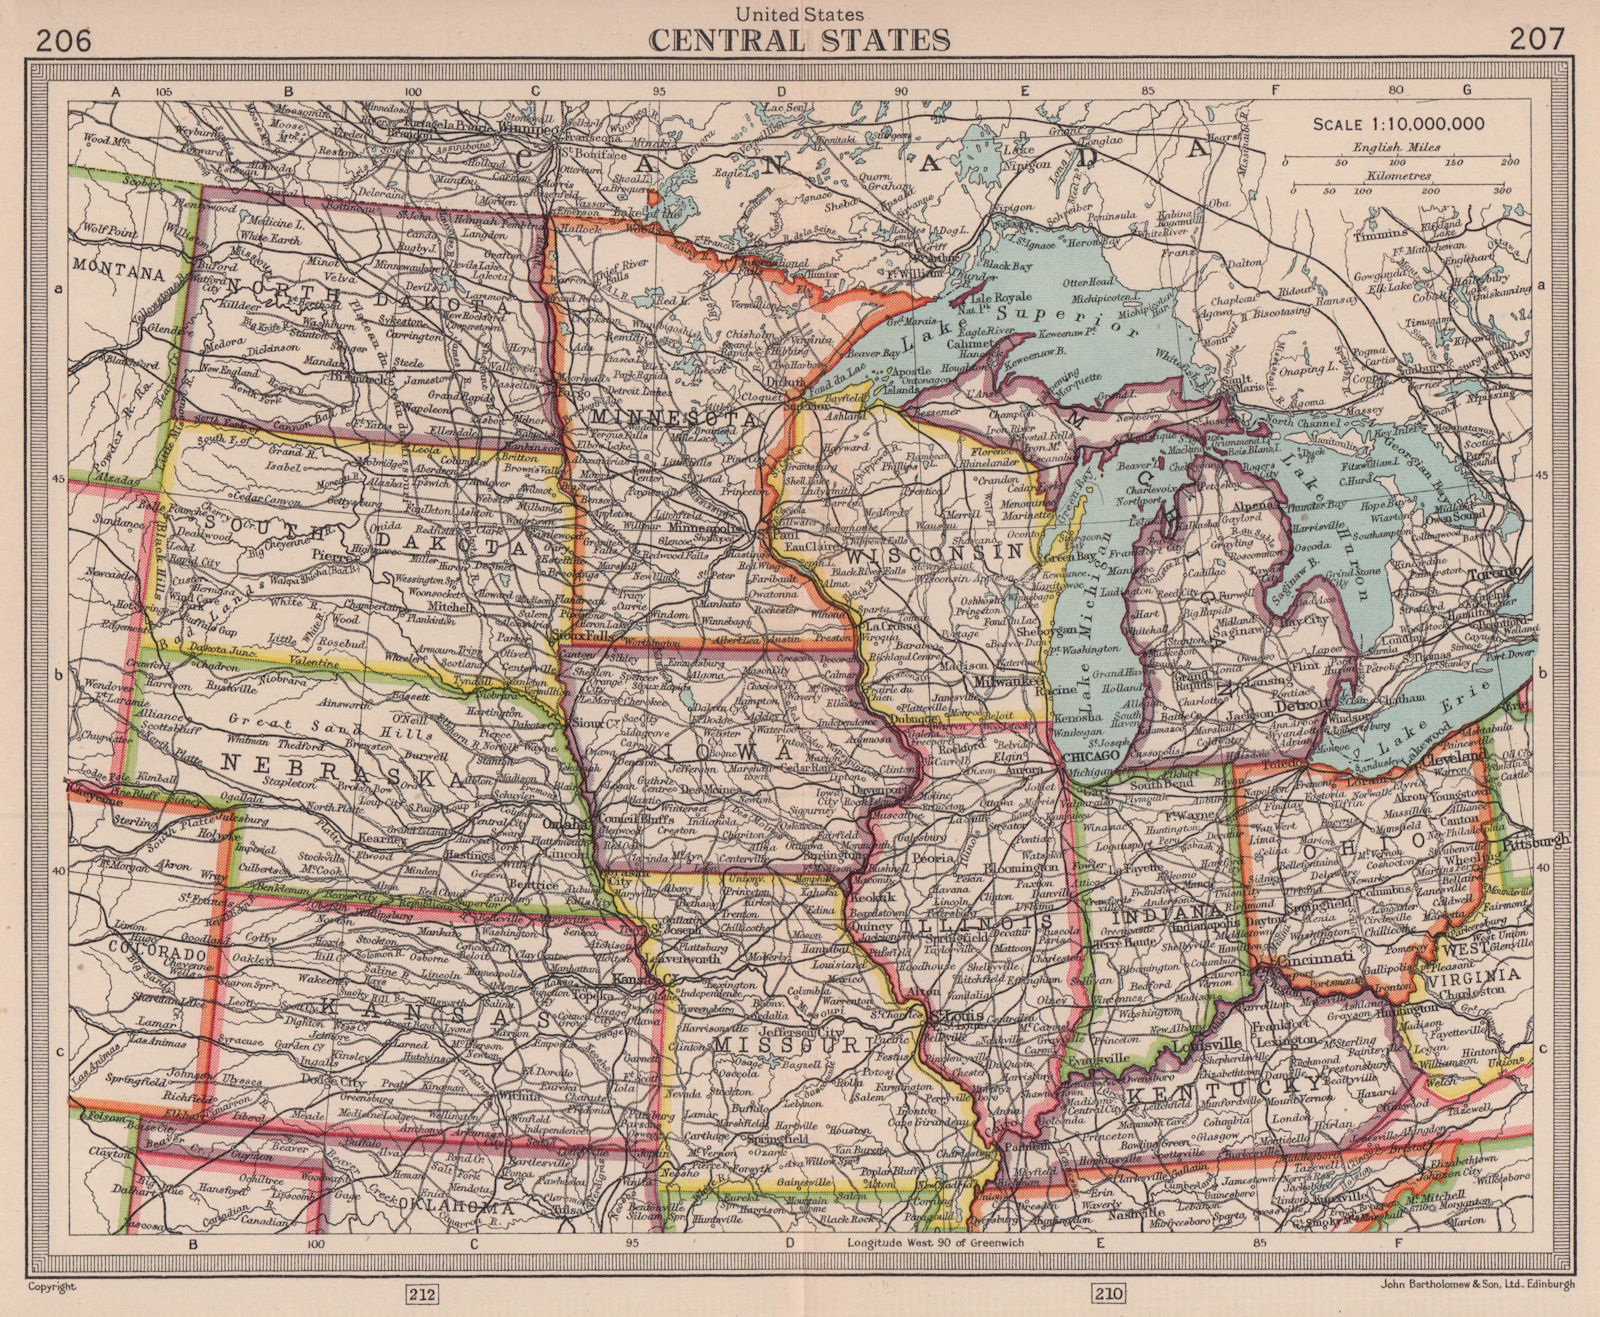 United States Central states. Midwestern USA. BARTHOLOMEW 1949 old vintage map